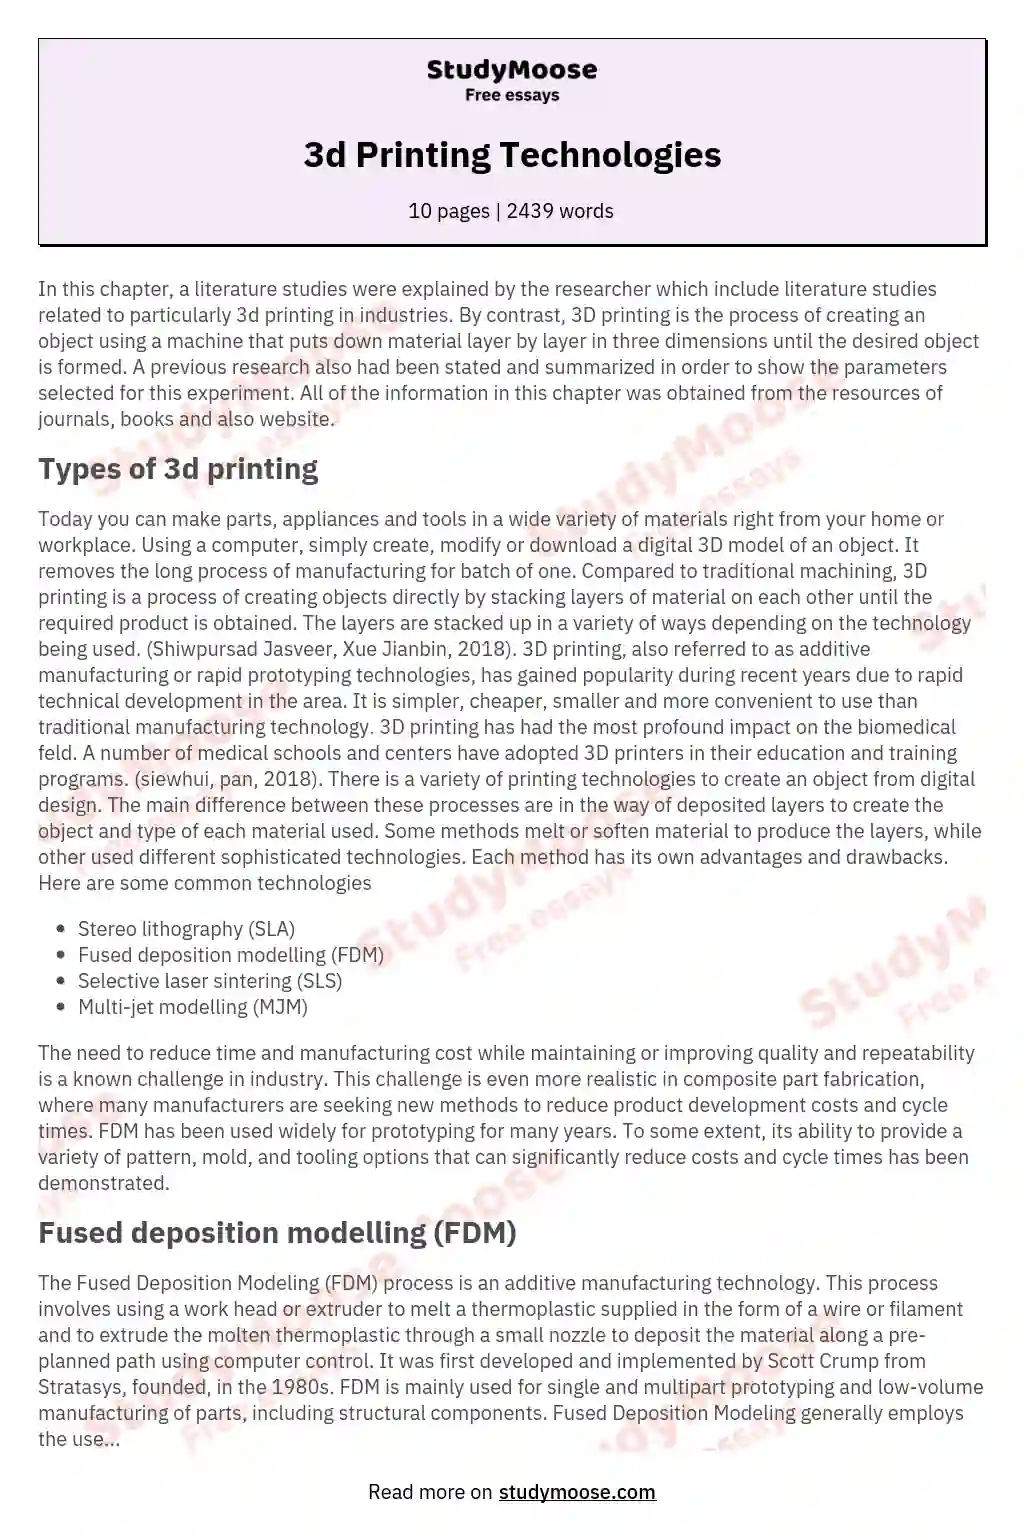 essay on 3d printing